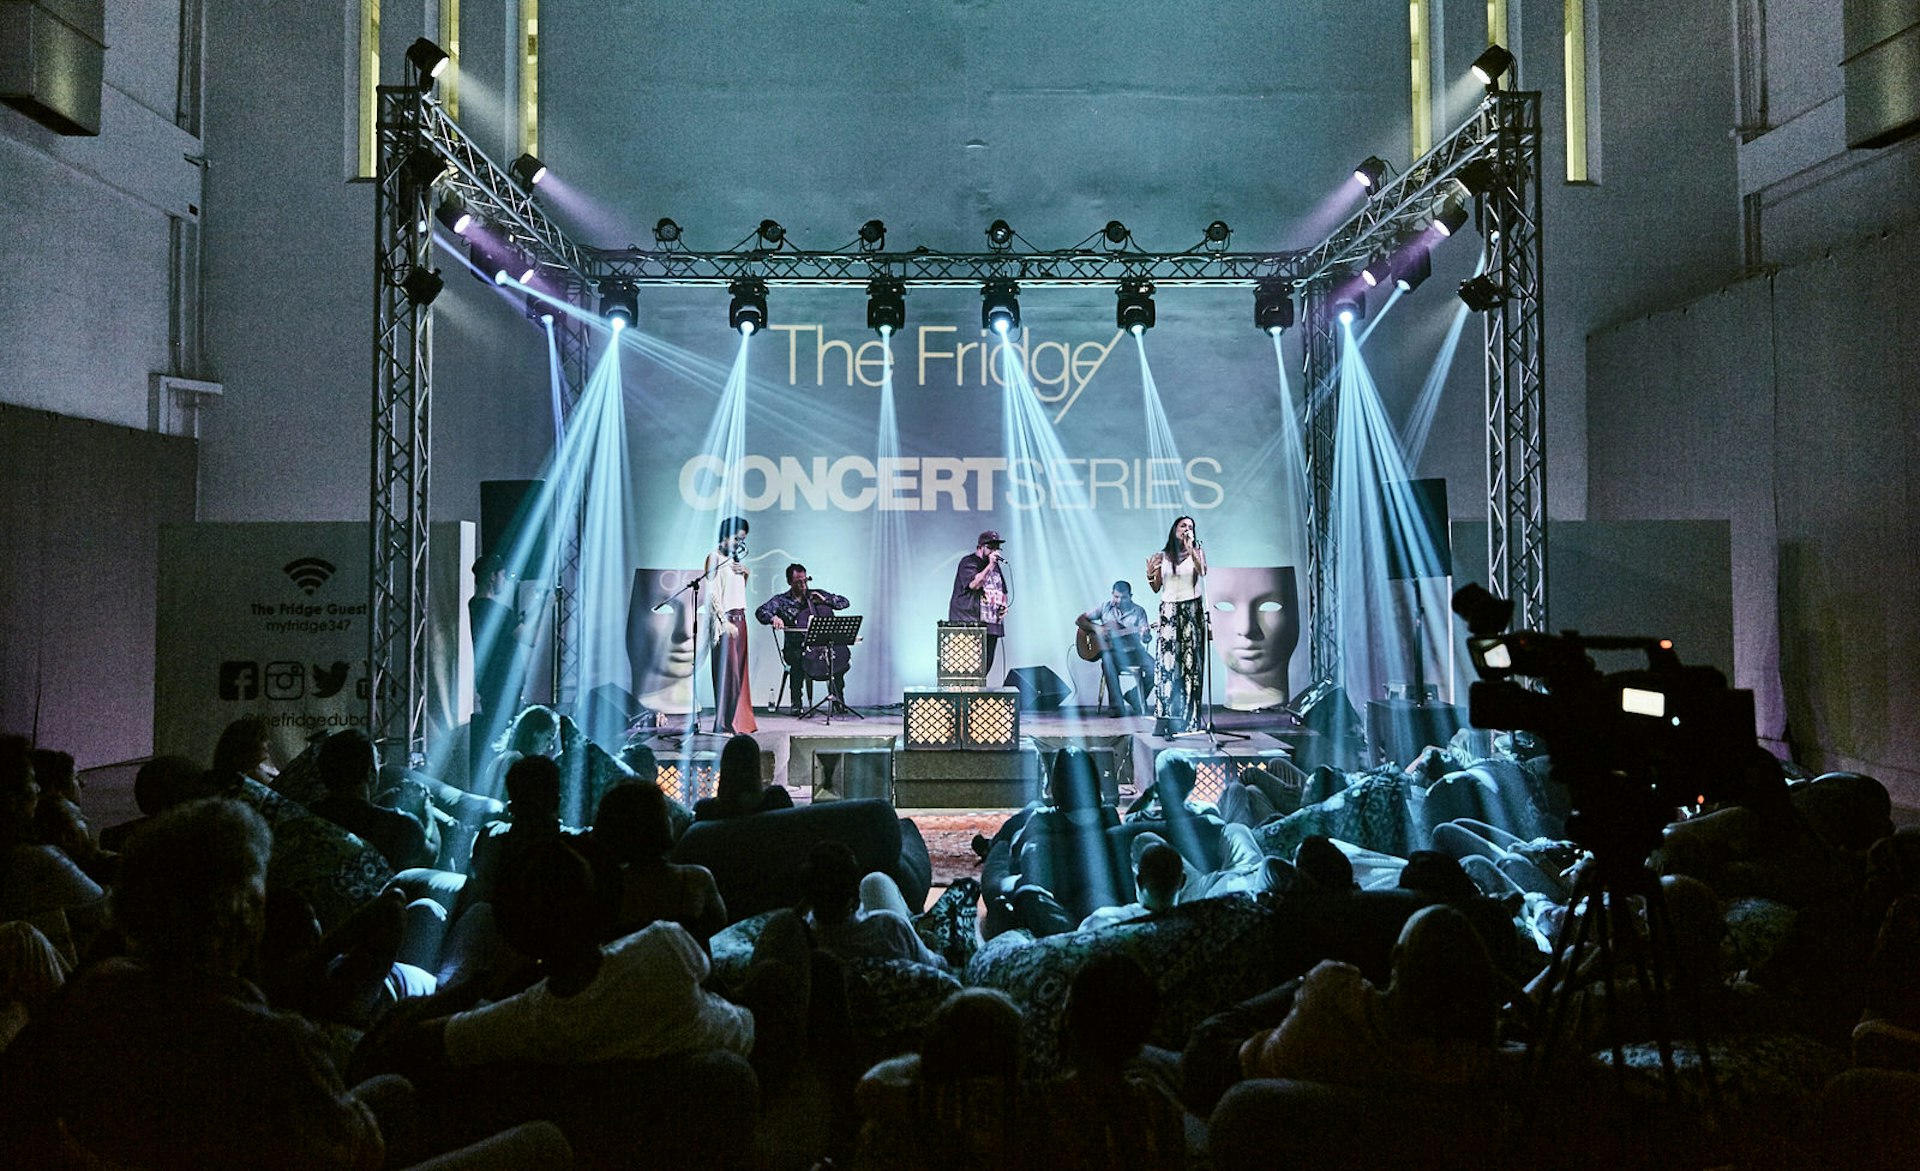 Musicians perform at The Fridge Concert Series at Alserkal Avenue, Dubai, United Arab Emirates